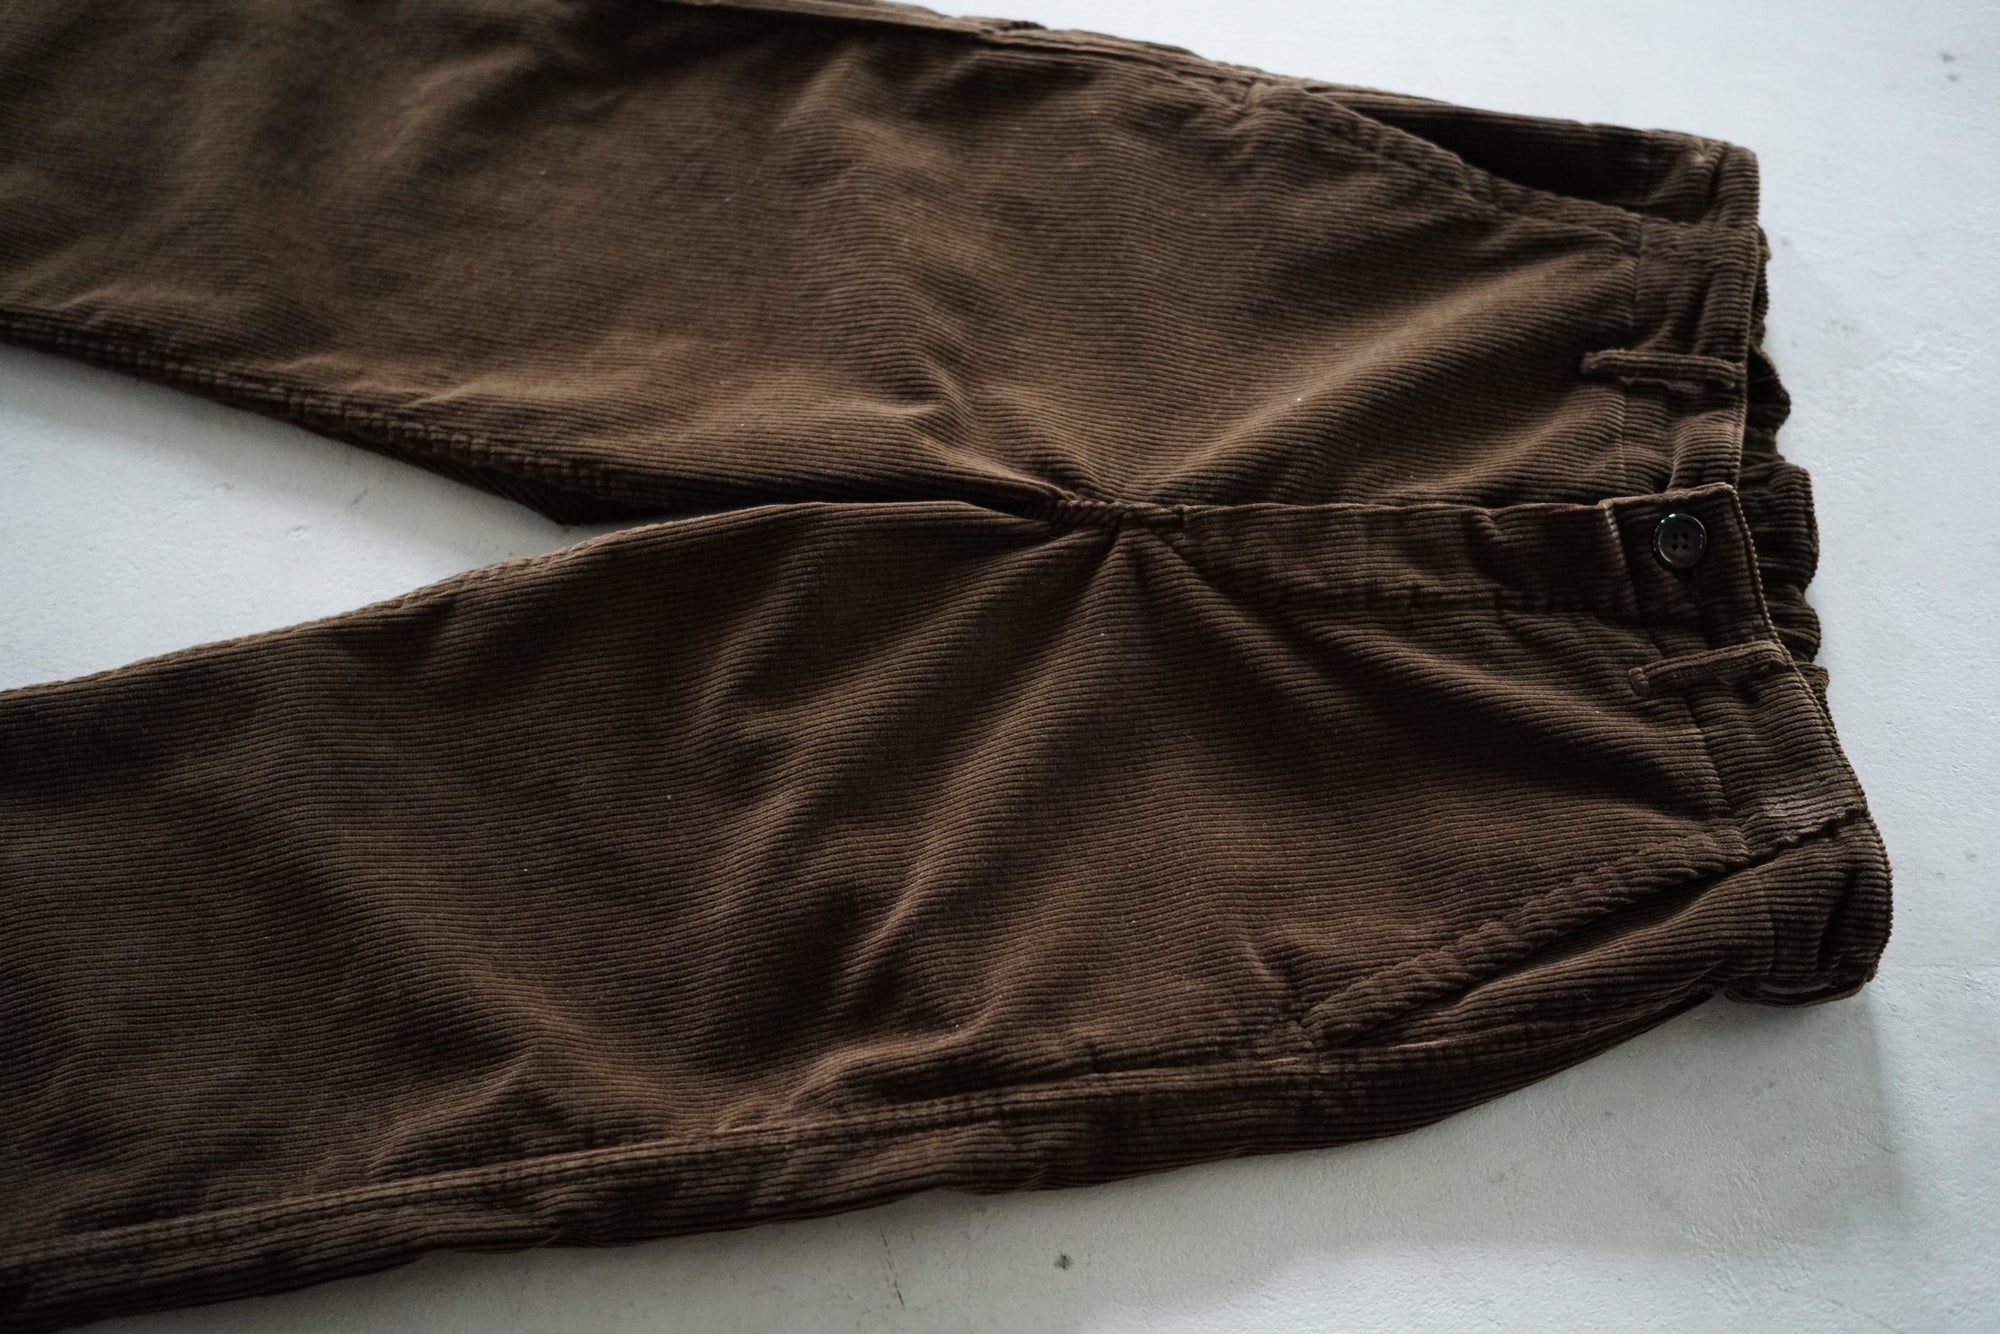 French Work Pants - Dark Brown Corduroy